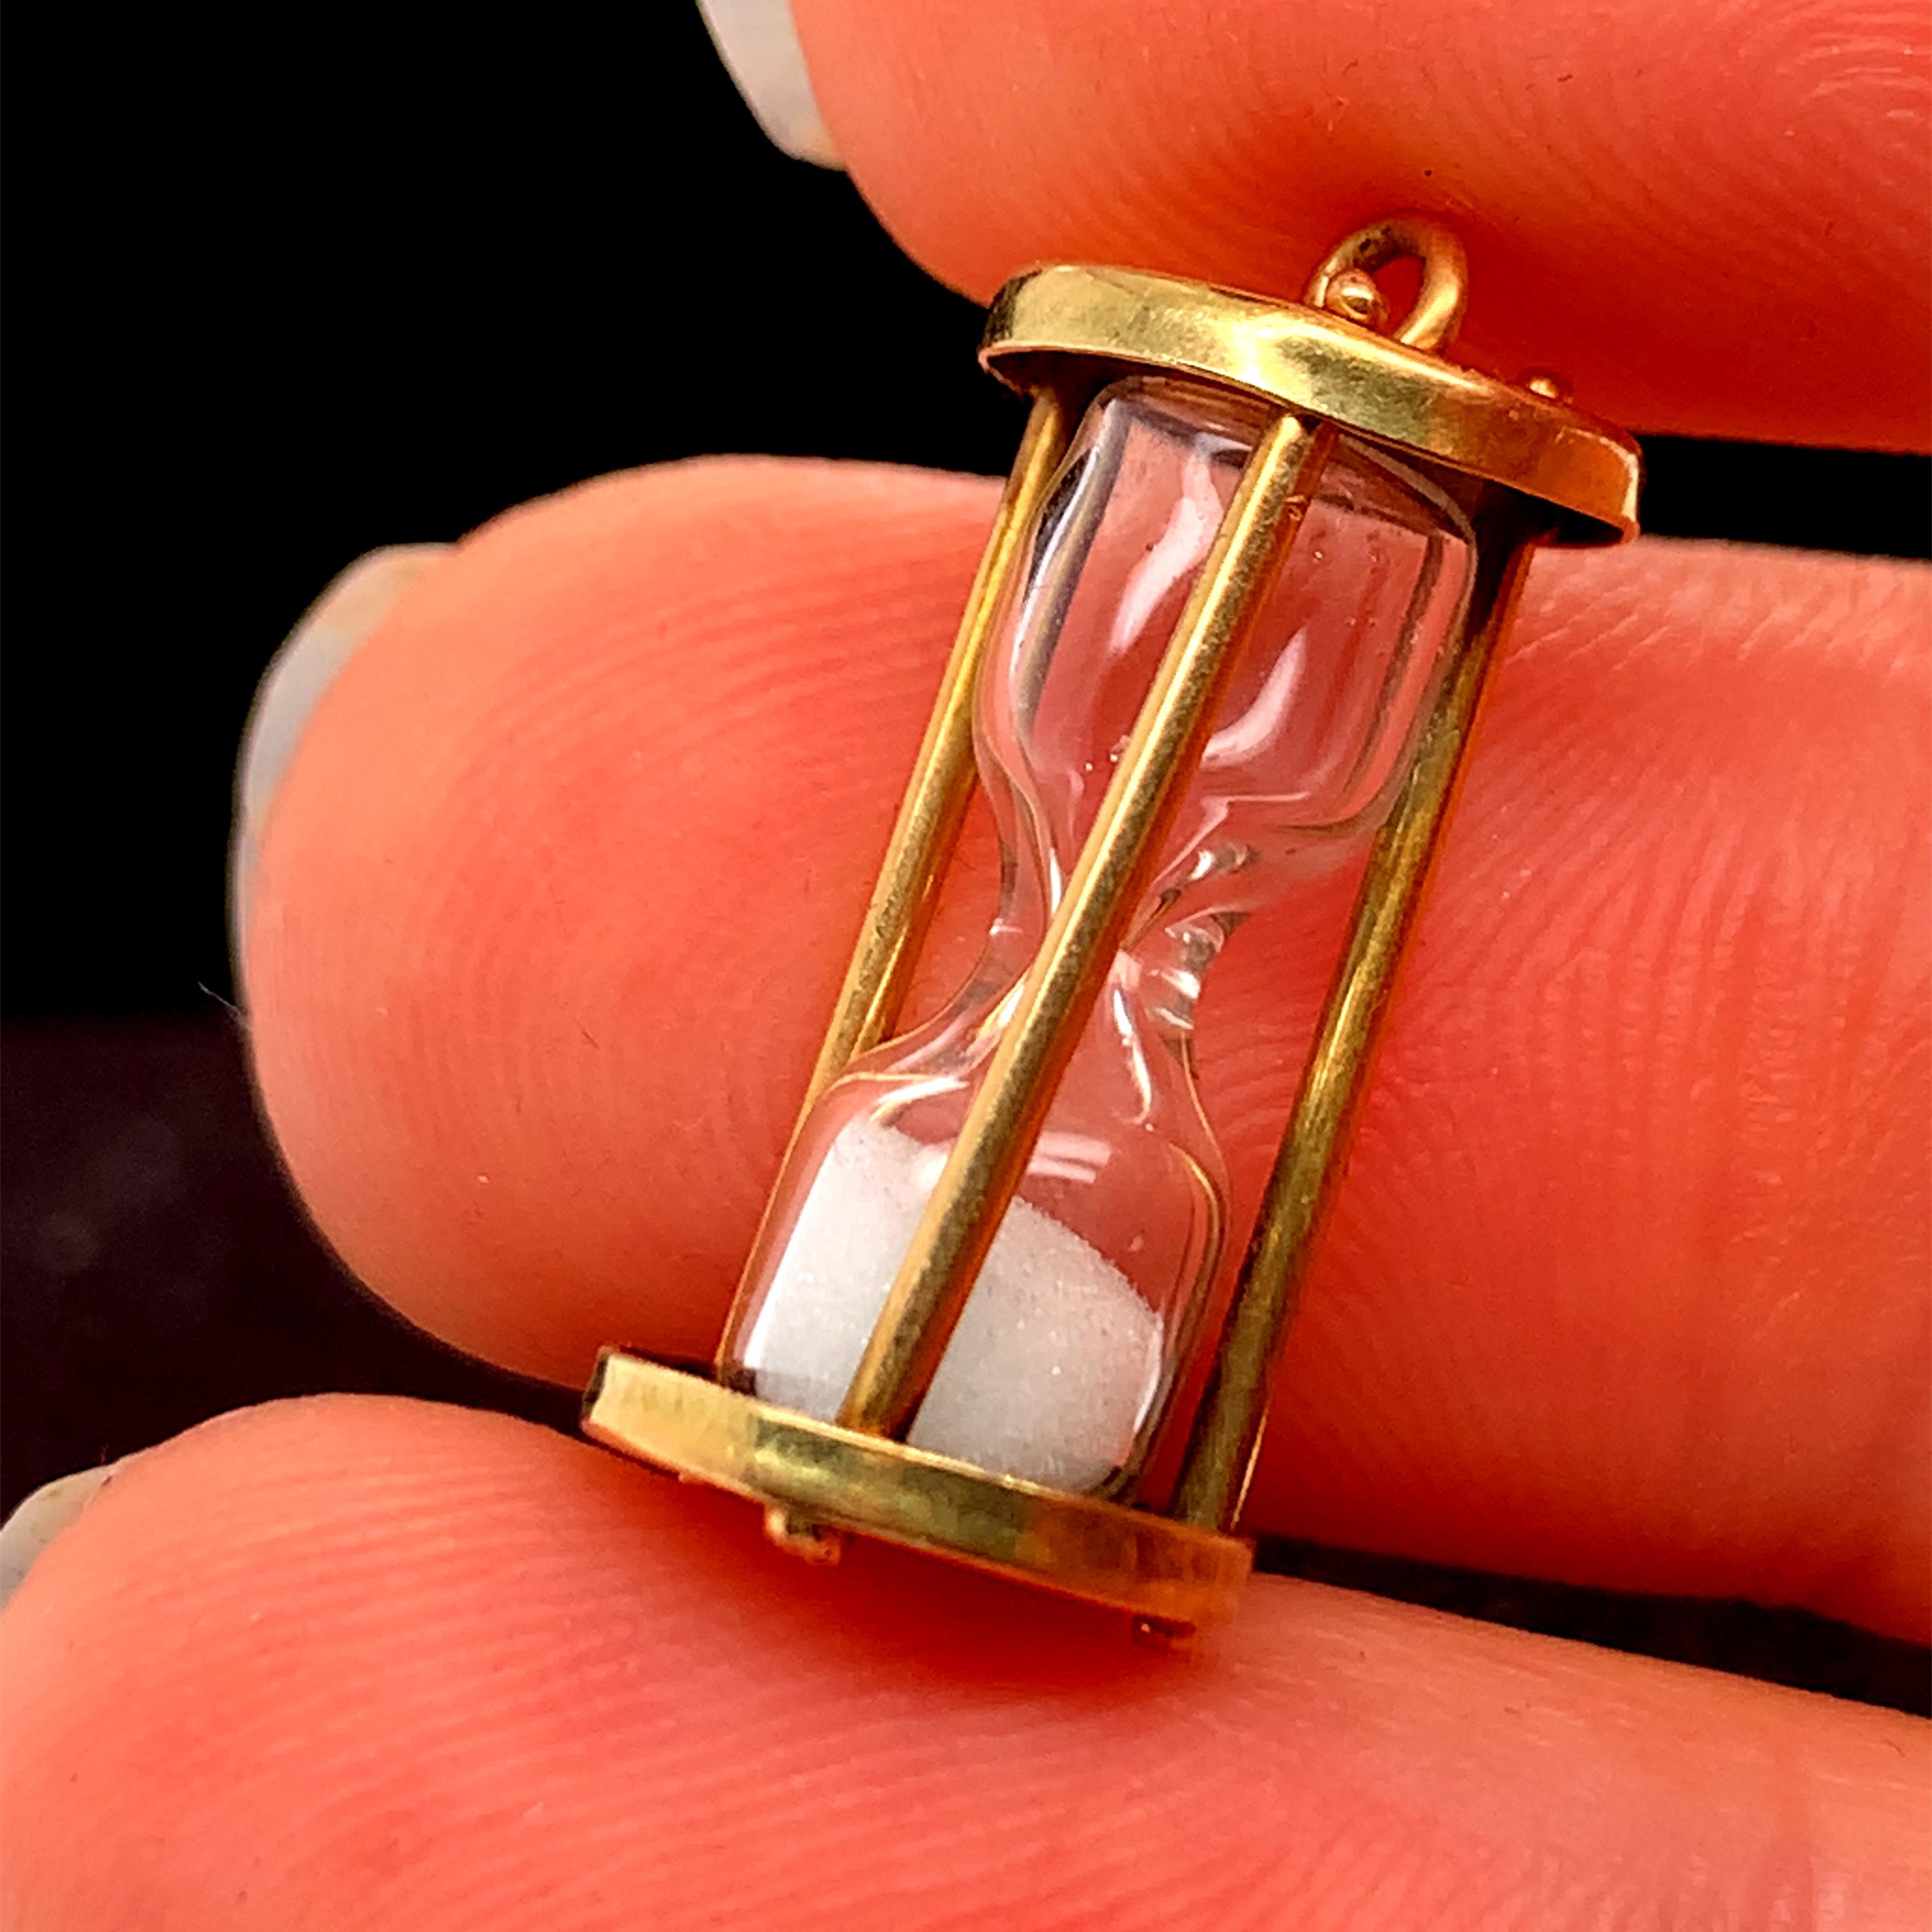 14k gold hourglass pendant